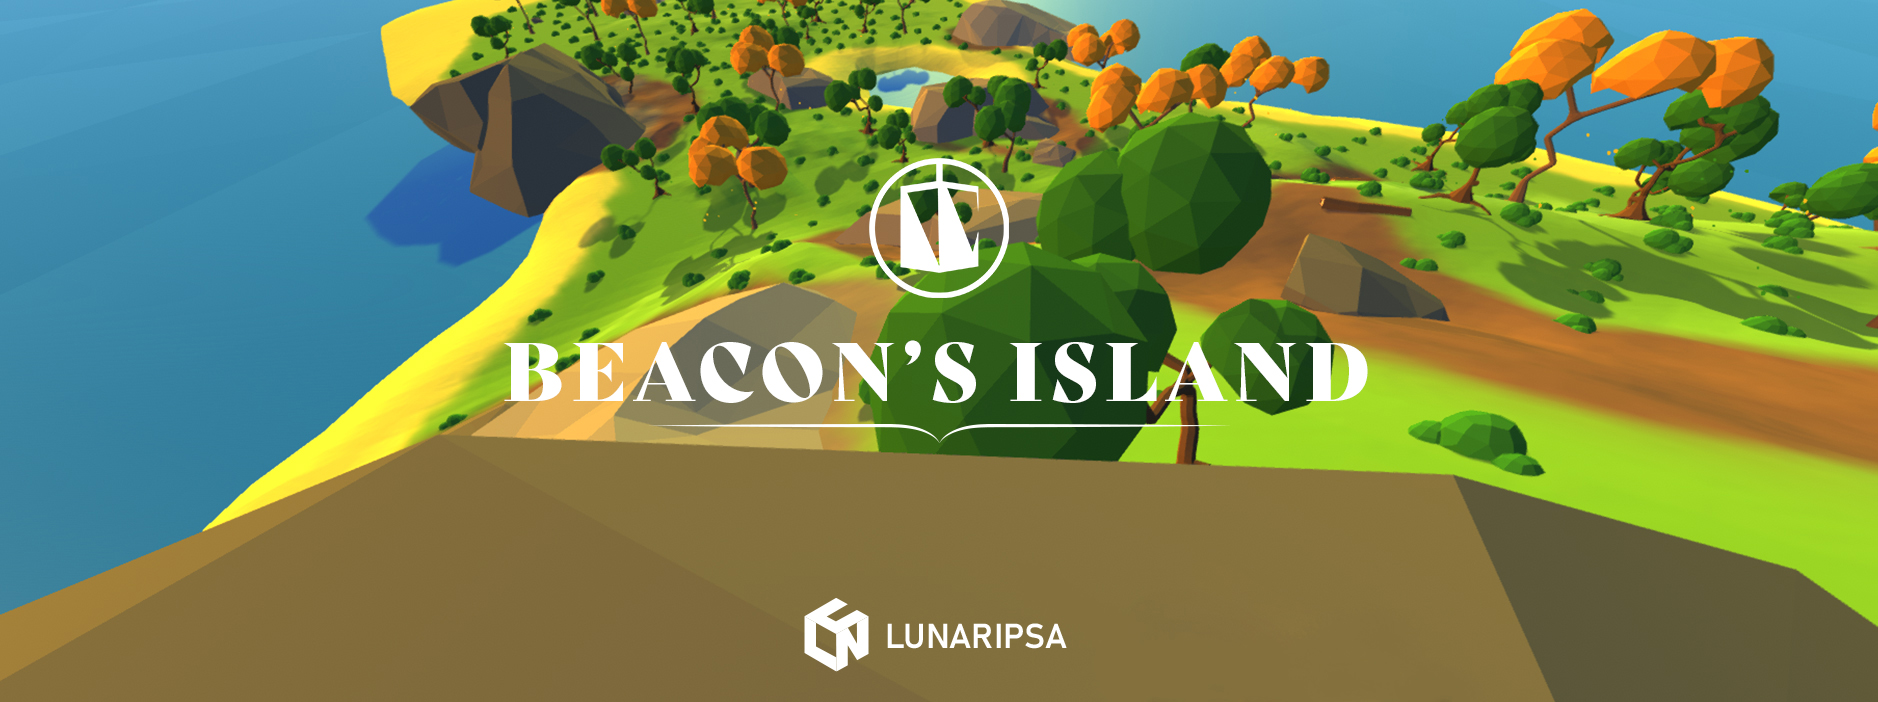 Beacon's Island